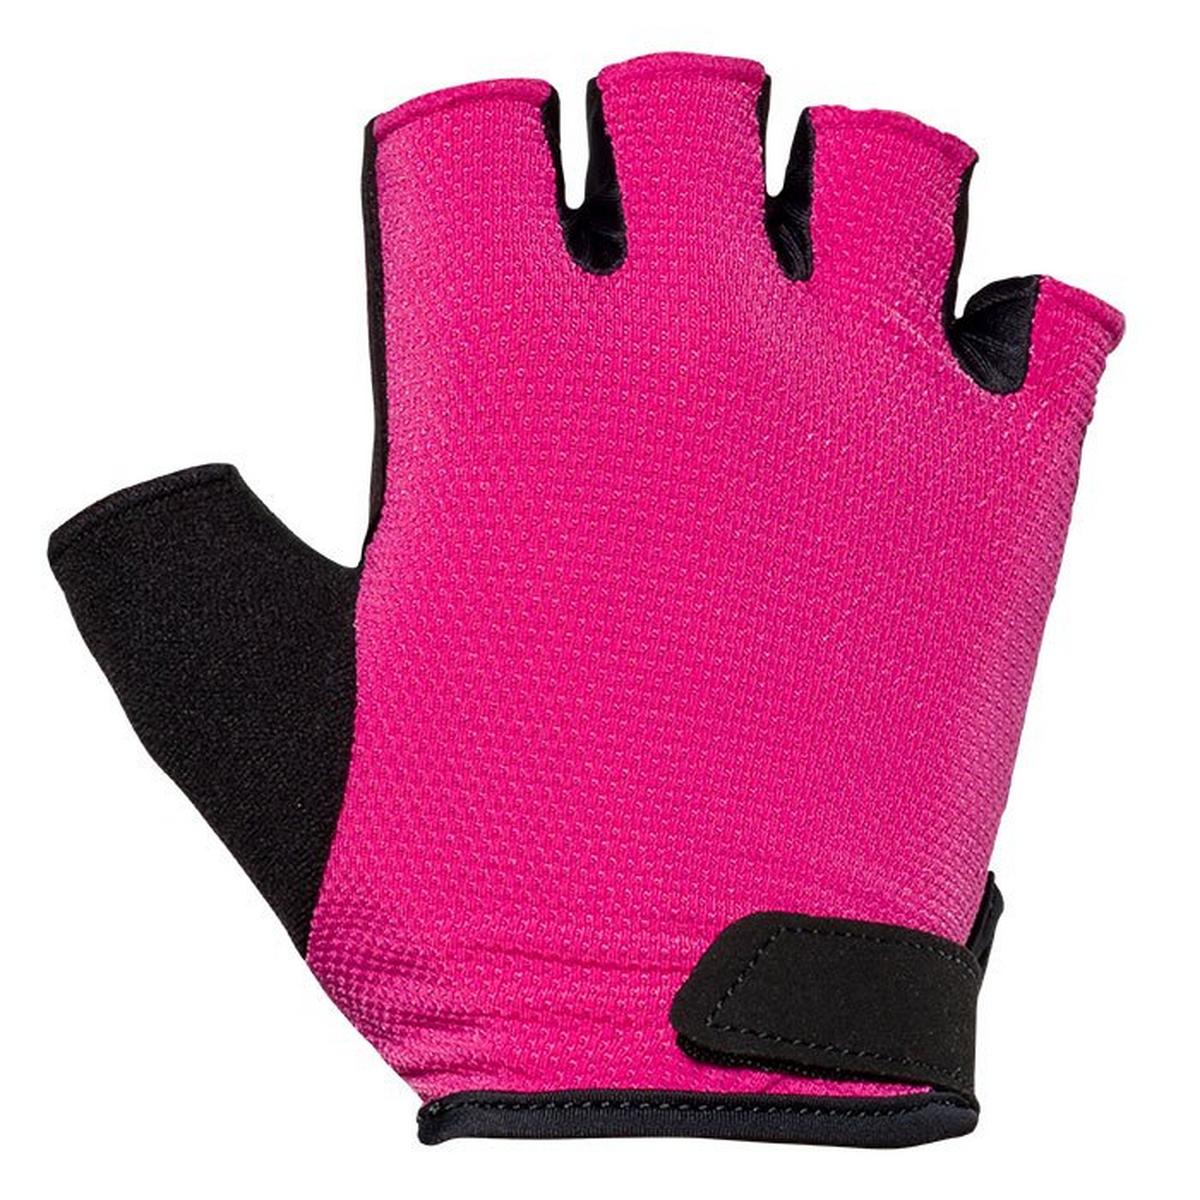 Women's Quest Gel Glove